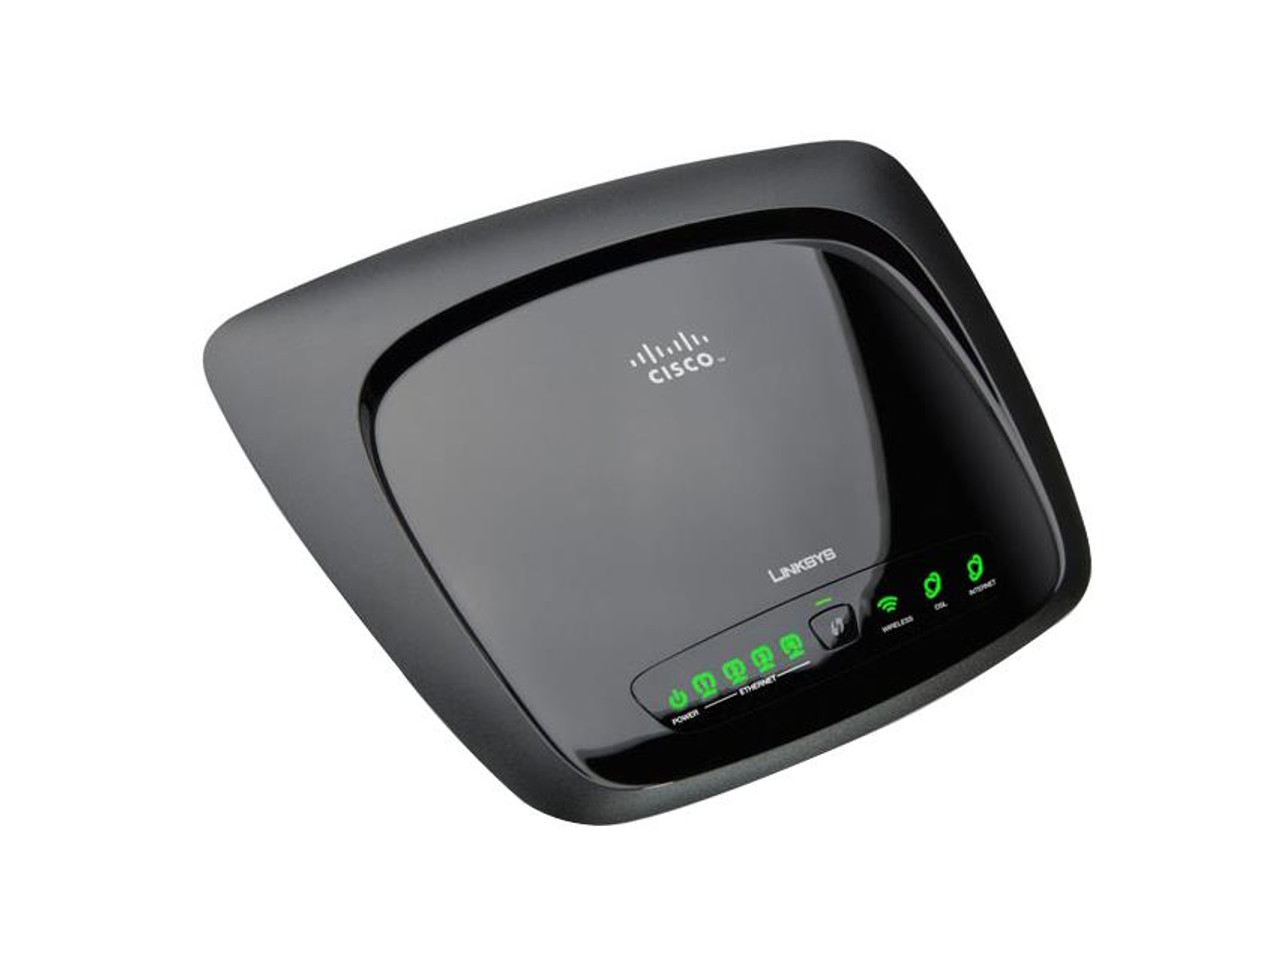 ADSL Gateway Wag54g2 802.11b/g Wireless Router (Refurbished)